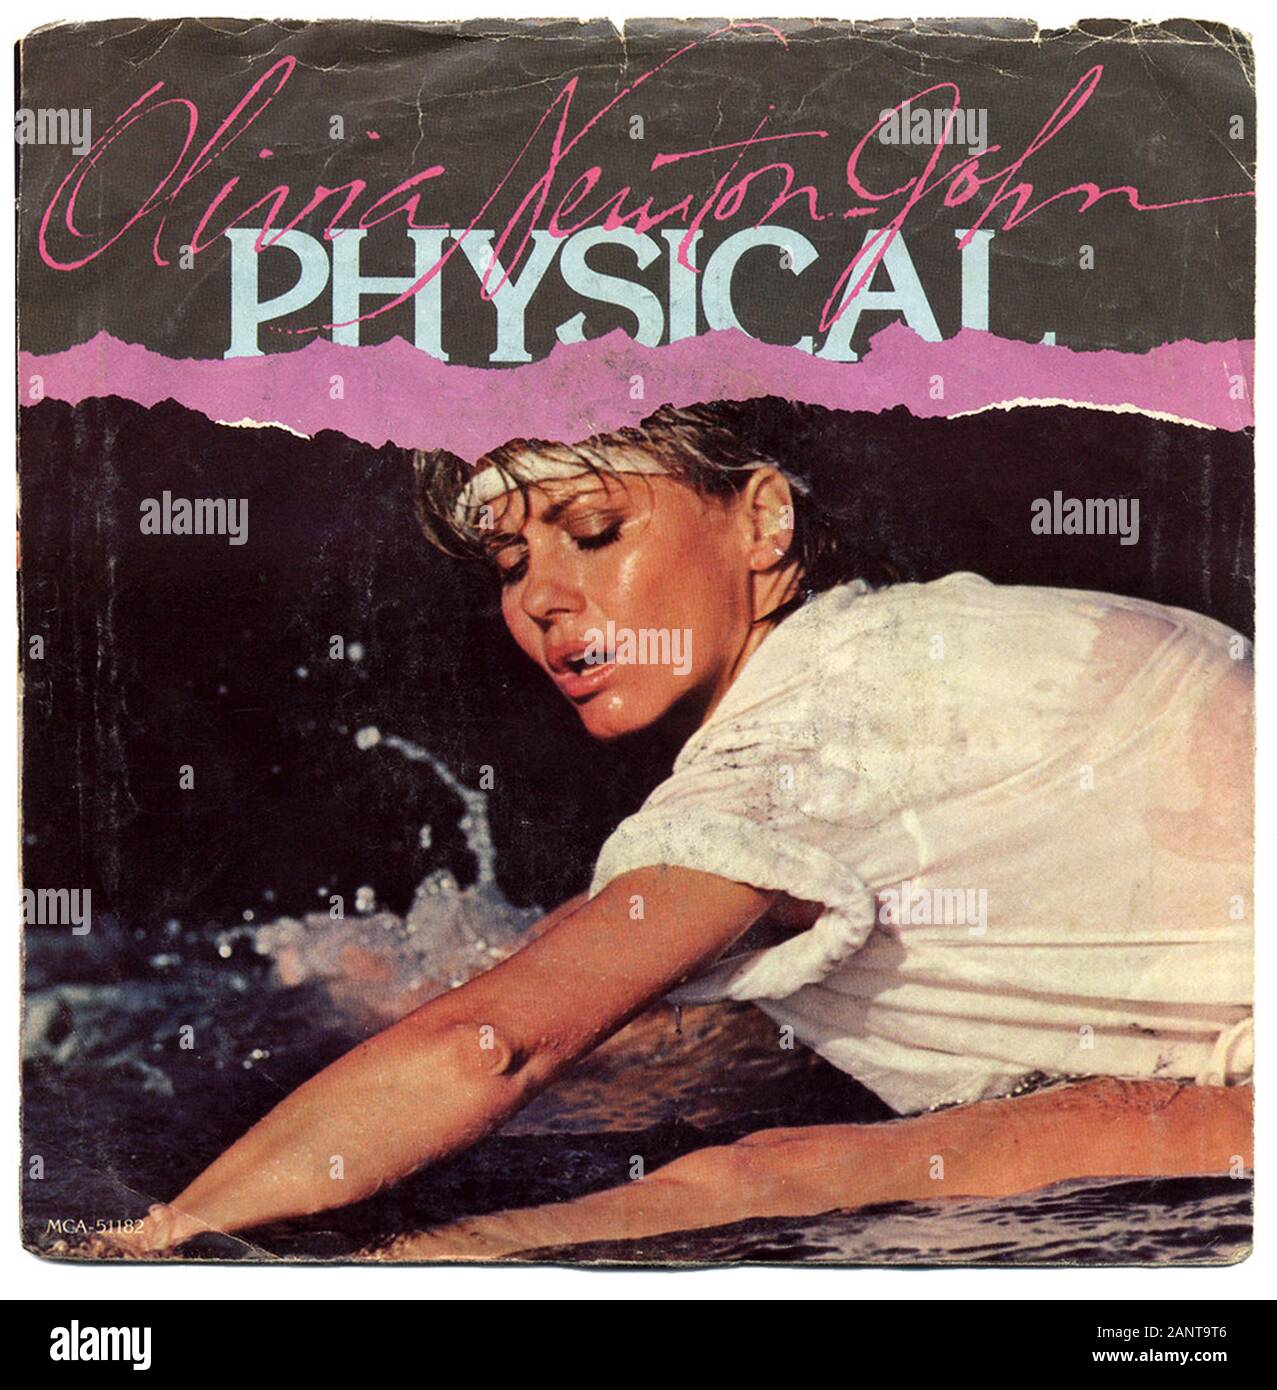 Olivia Newton-John - Physical - Classic vintage vinyl album Stock Photo